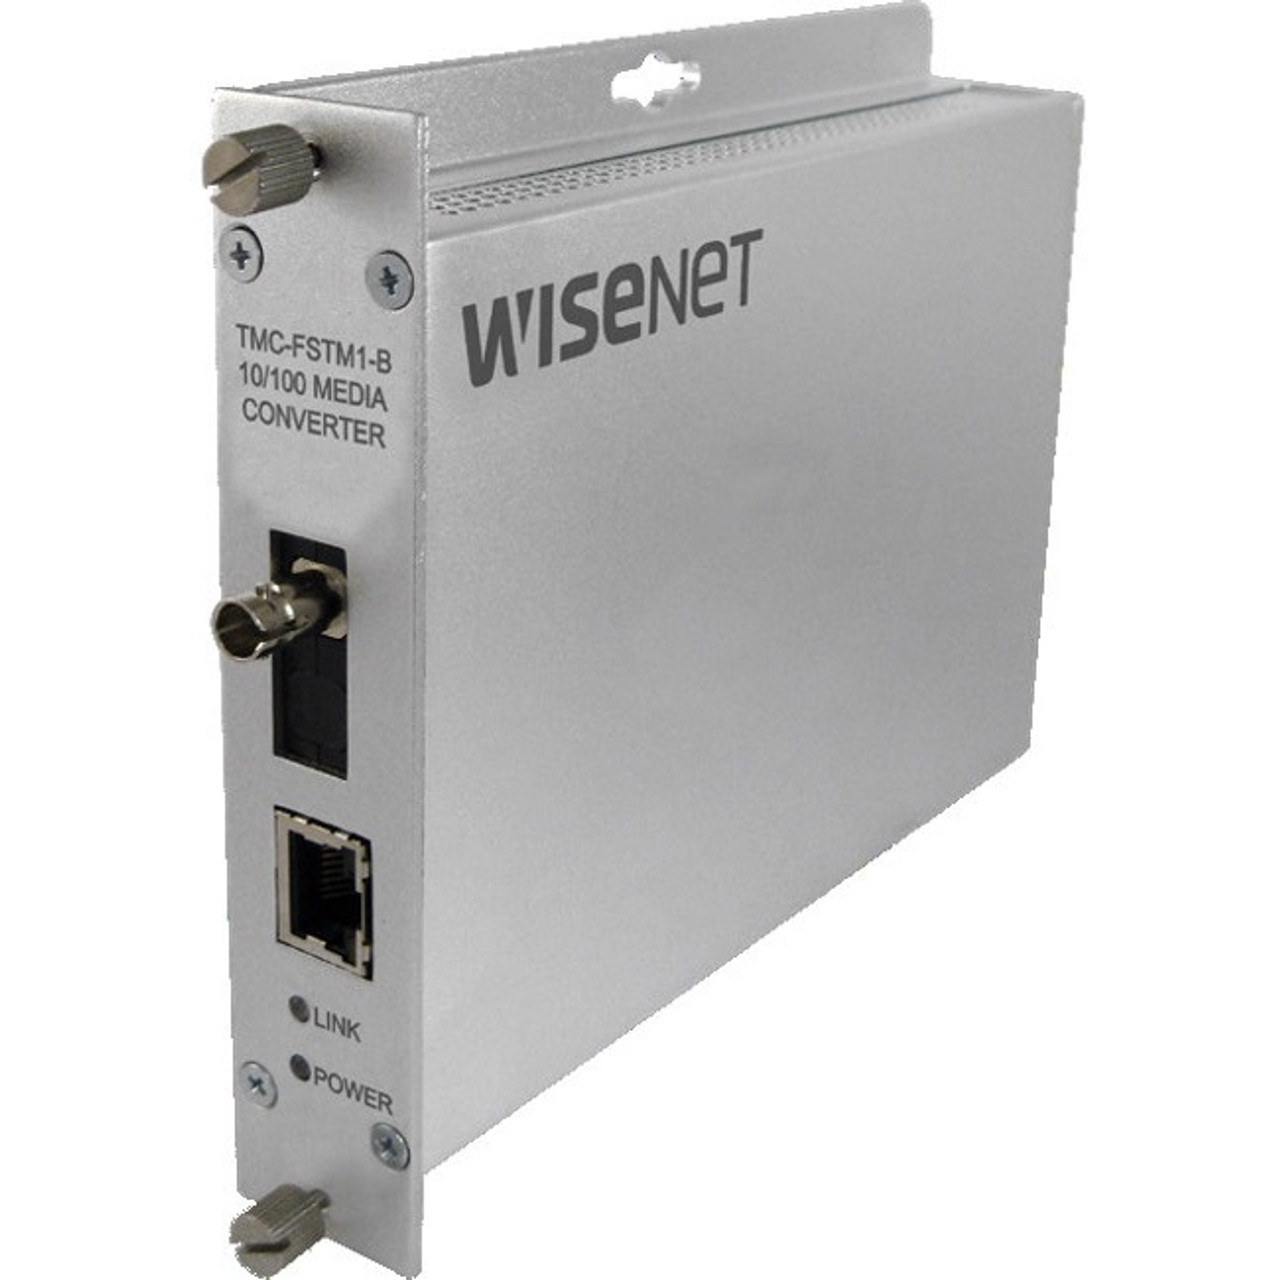 Wisenet TMC-FSCM1-B